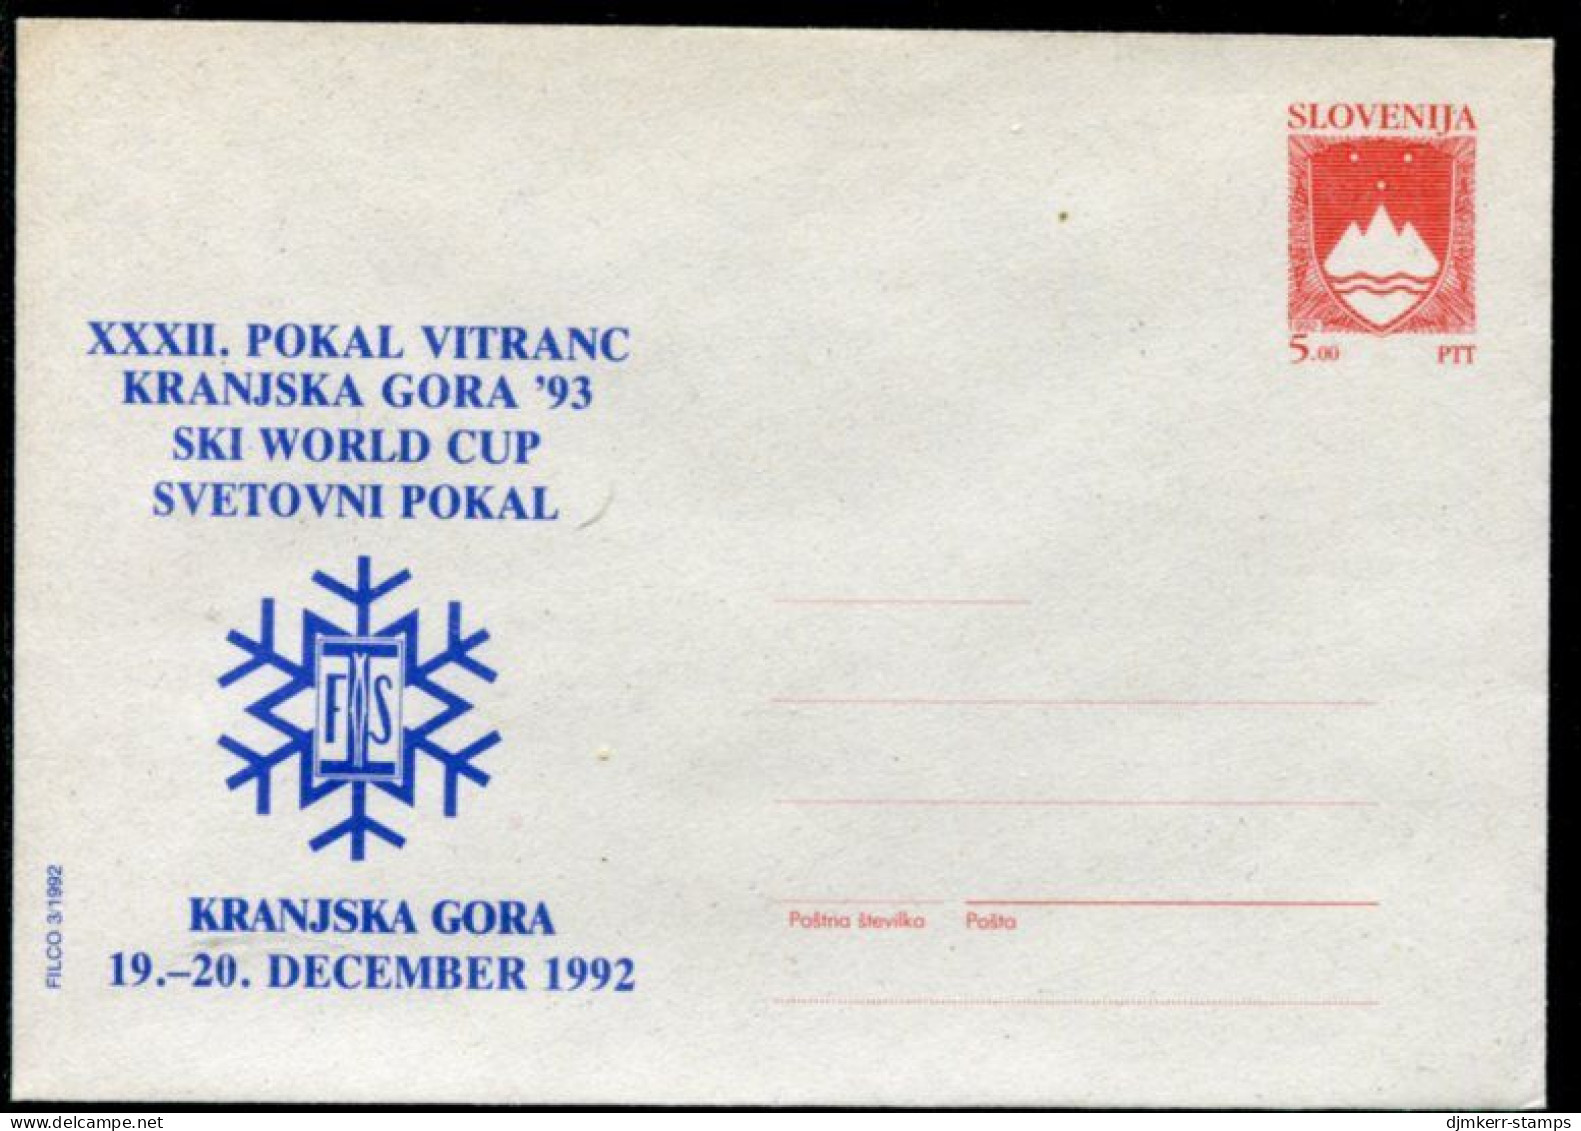 SLOVENIA 1992 5.00 T.  Arms Publicity Postal Stationery Envelope, Unused.  As Michel U1b - Slovenië